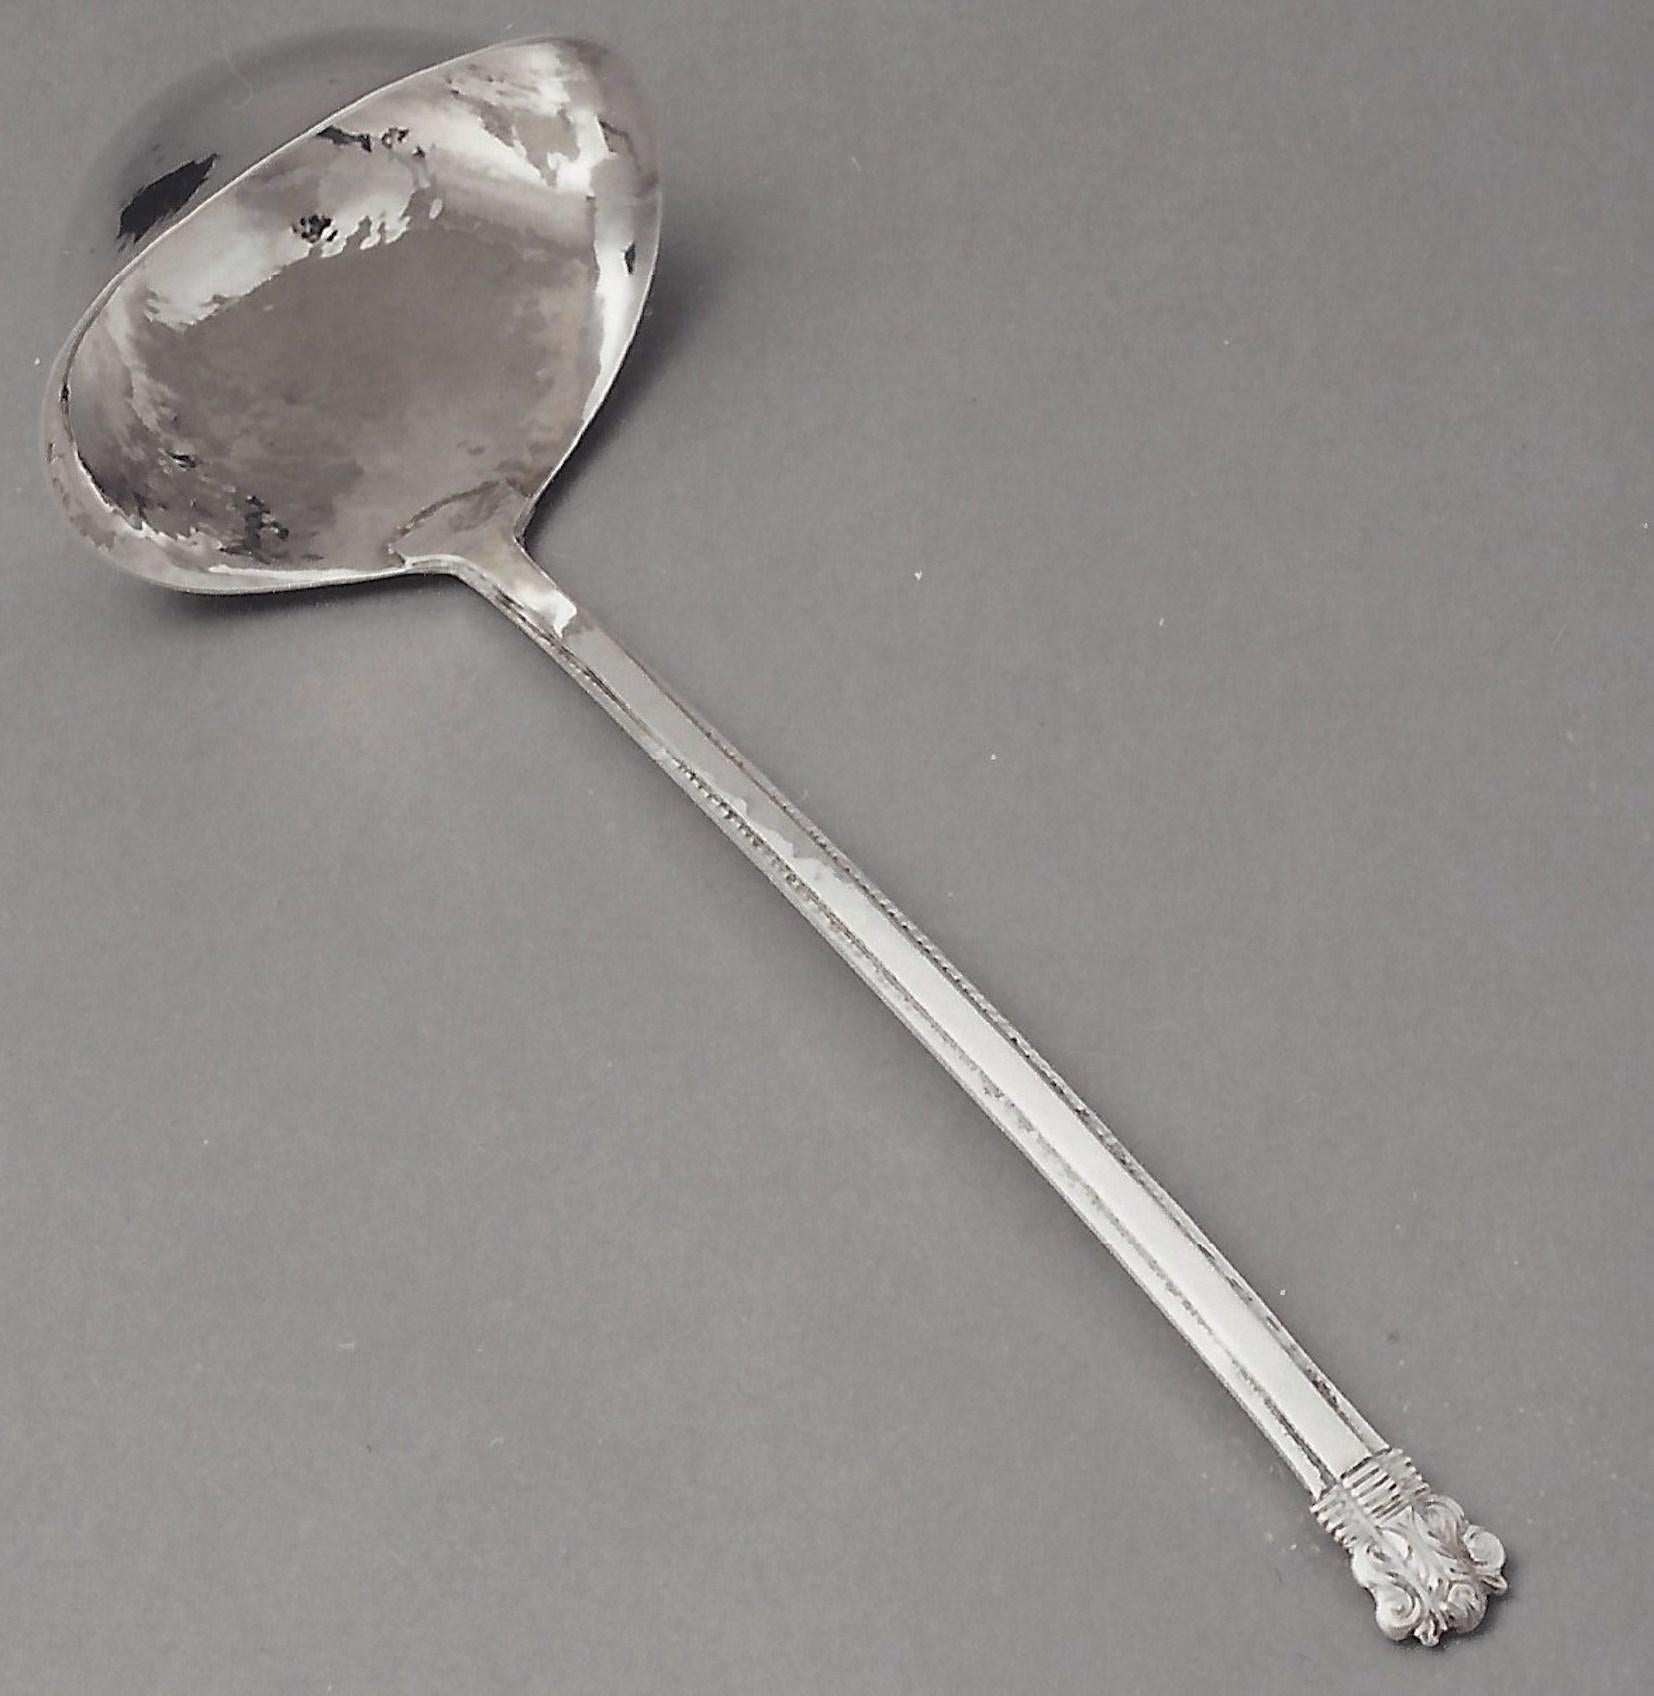 Silver Ladle by Omar Ramsden London 1924
length 27 cm x diameter 10cm
178 grams